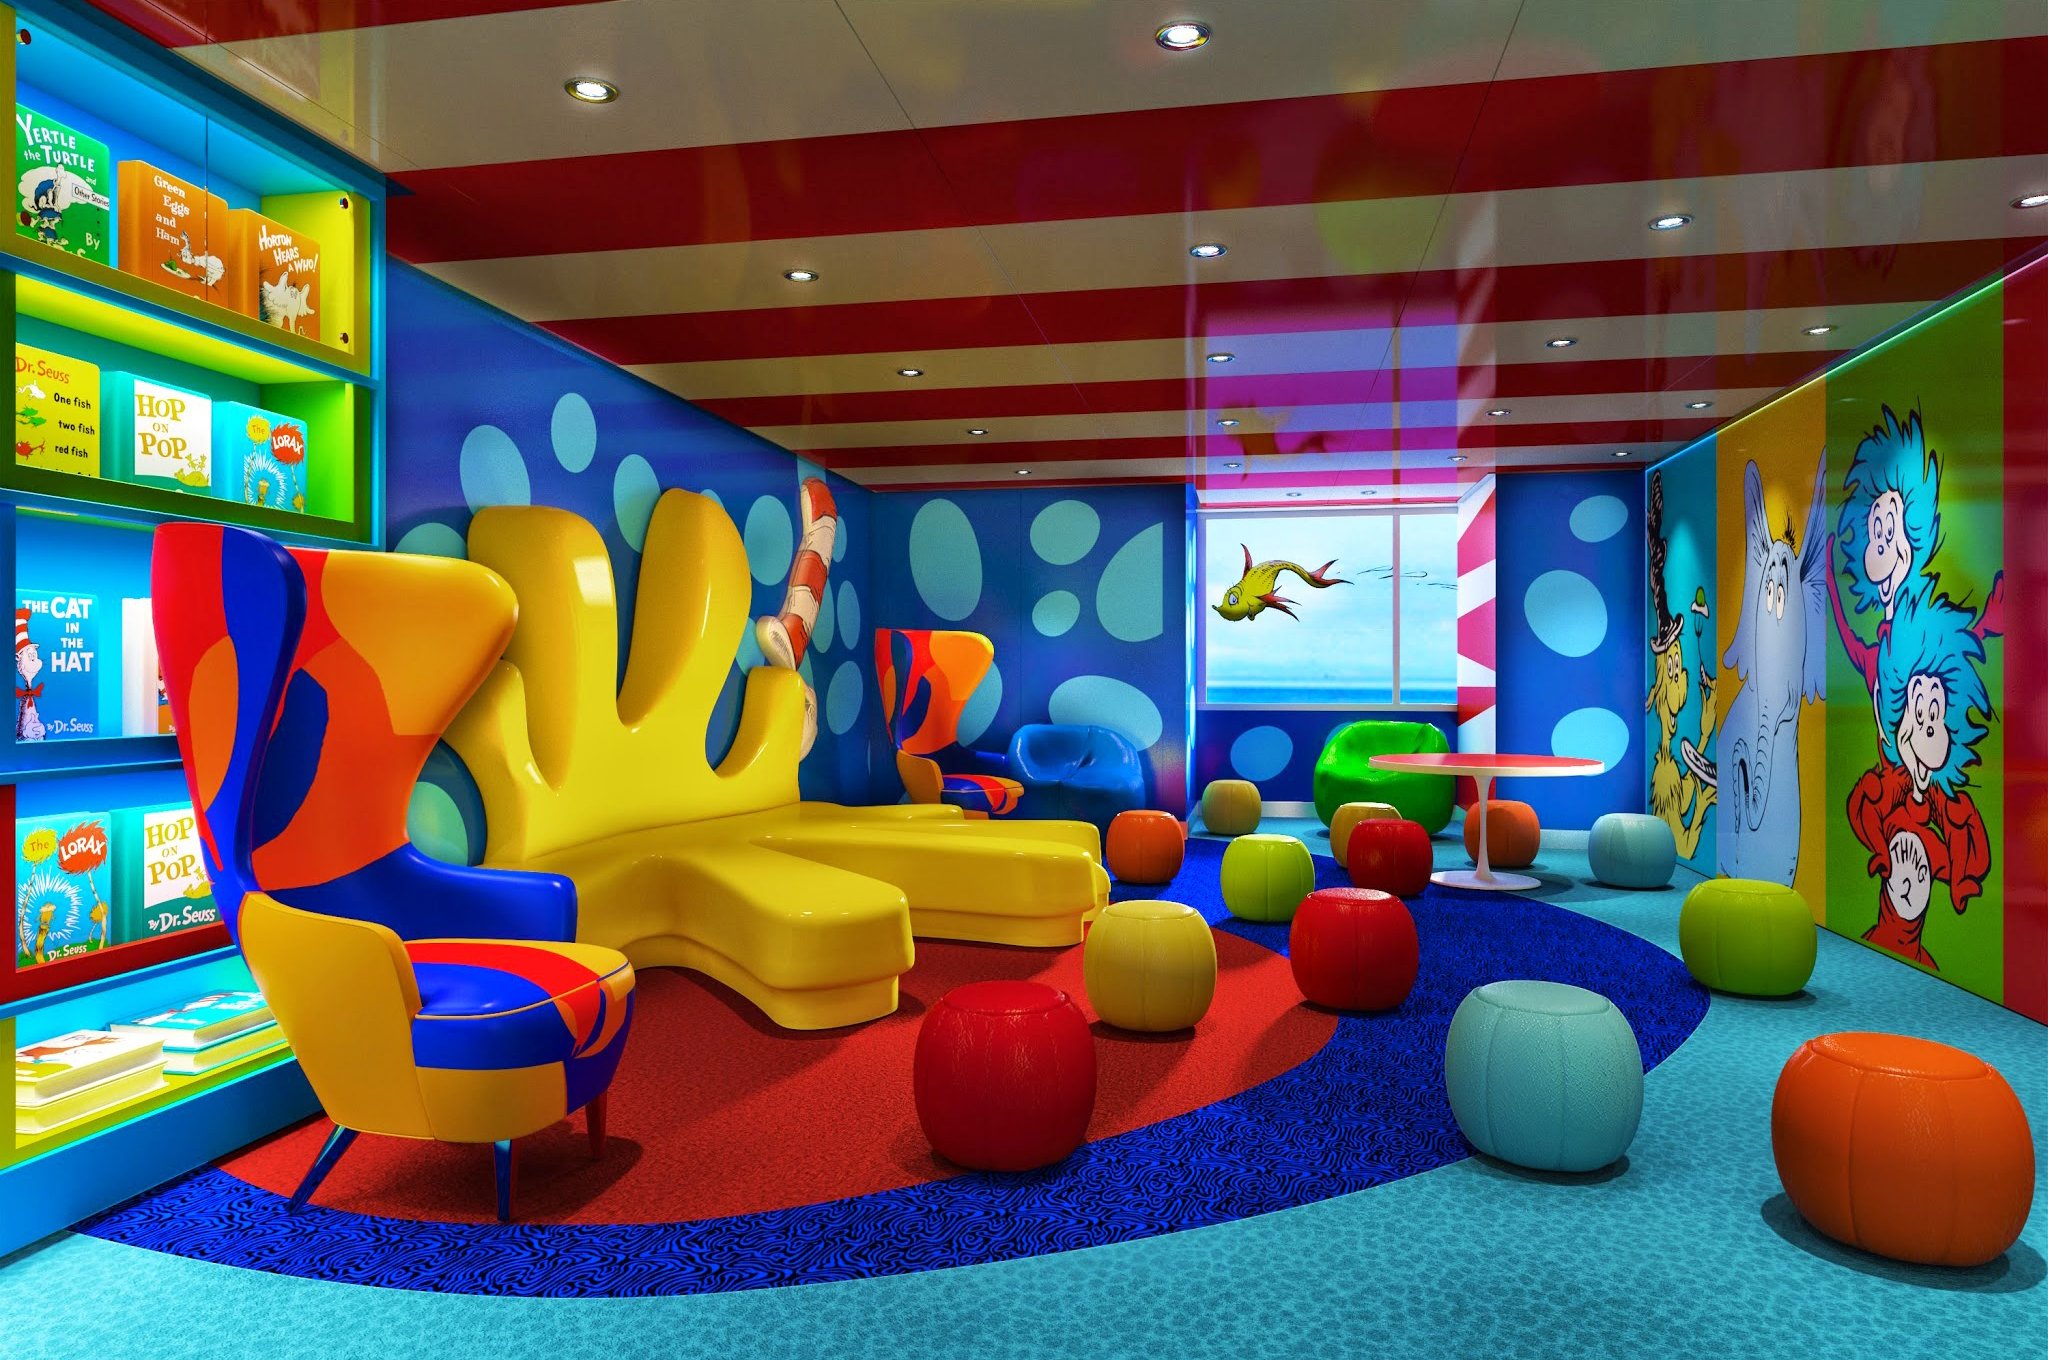 Комната развлечений. Детская игровая комната. Развлекательная комната для детей. Детские комнаты развлечений. Игровая комната для детей.